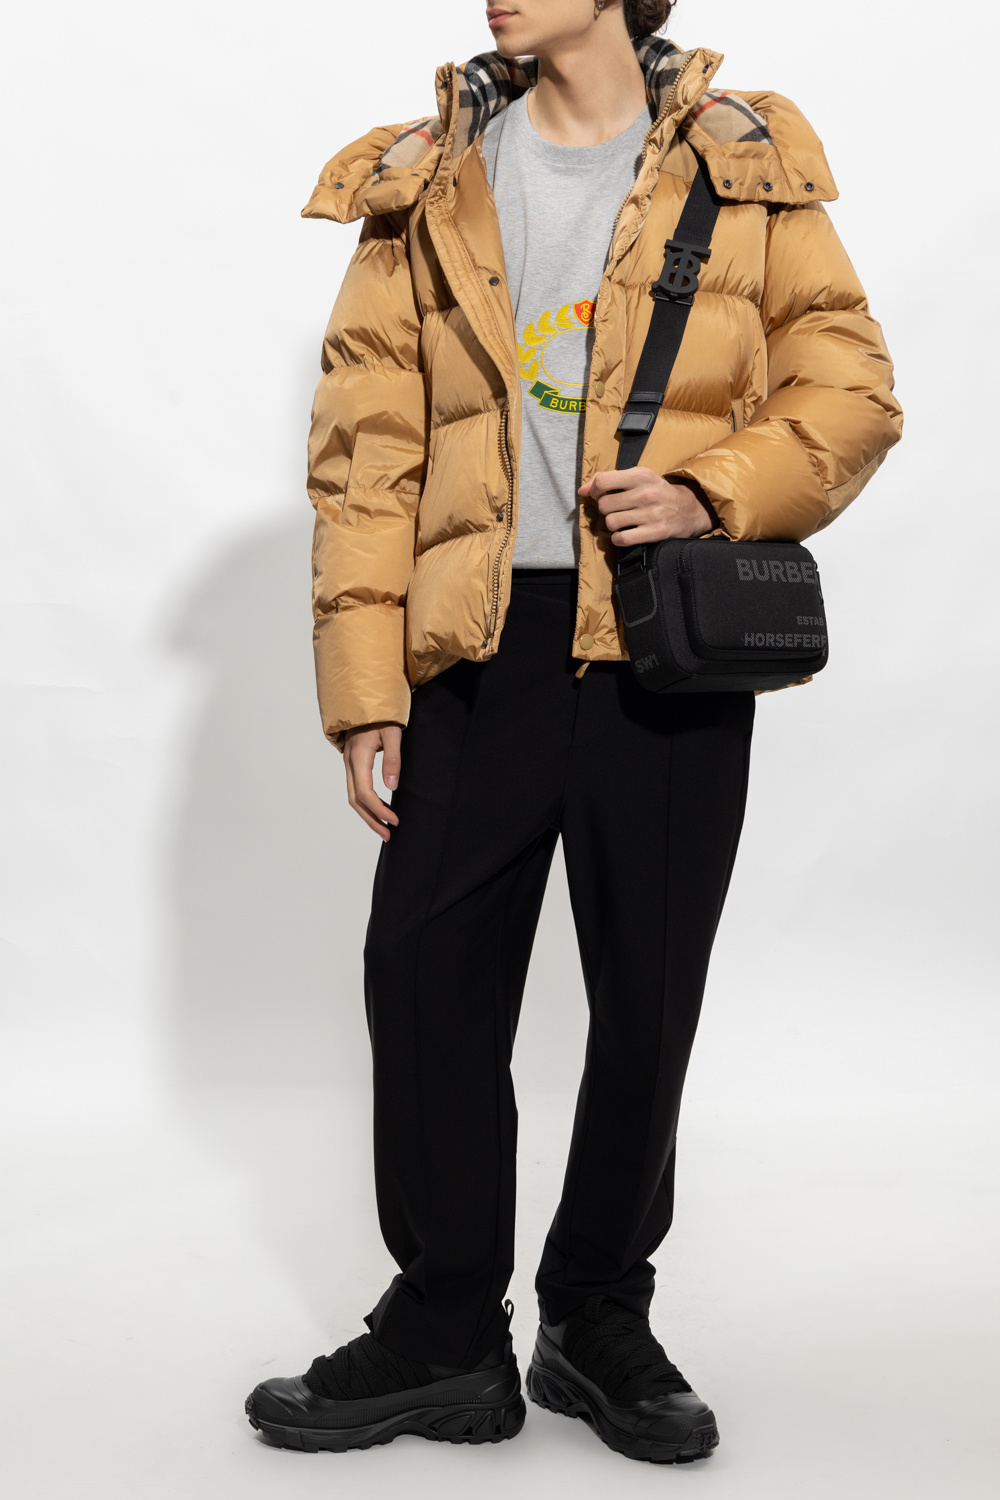 burberry Foulard ‘Leeds’ jacket with detachable sleeves